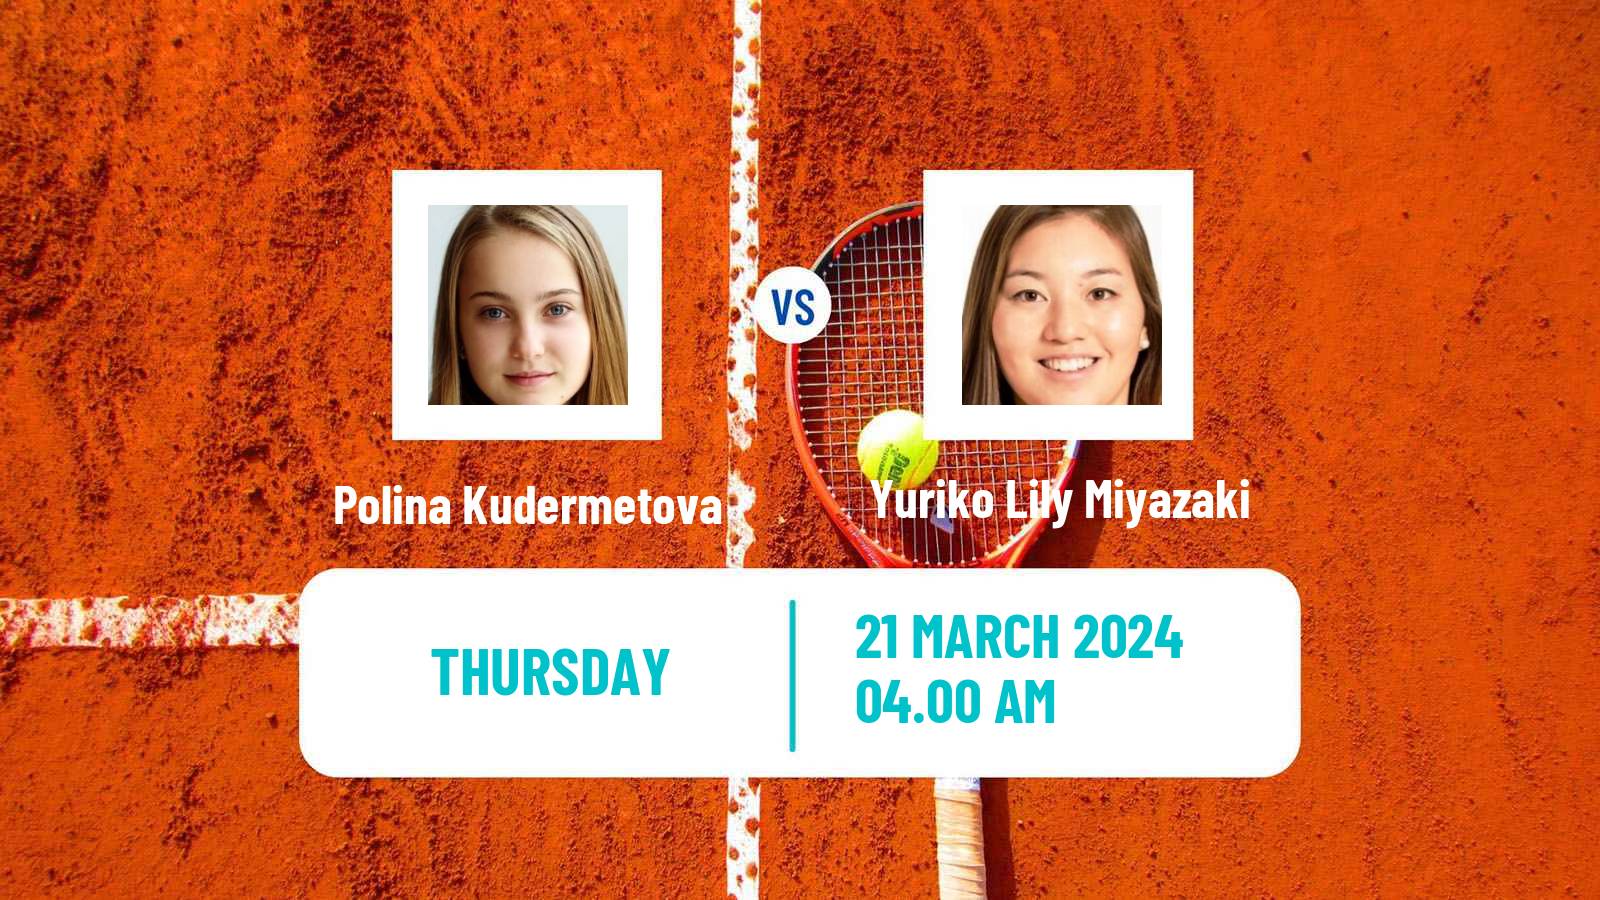 Tennis ITF W75 MarIBOr Women Polina Kudermetova - Yuriko Lily Miyazaki